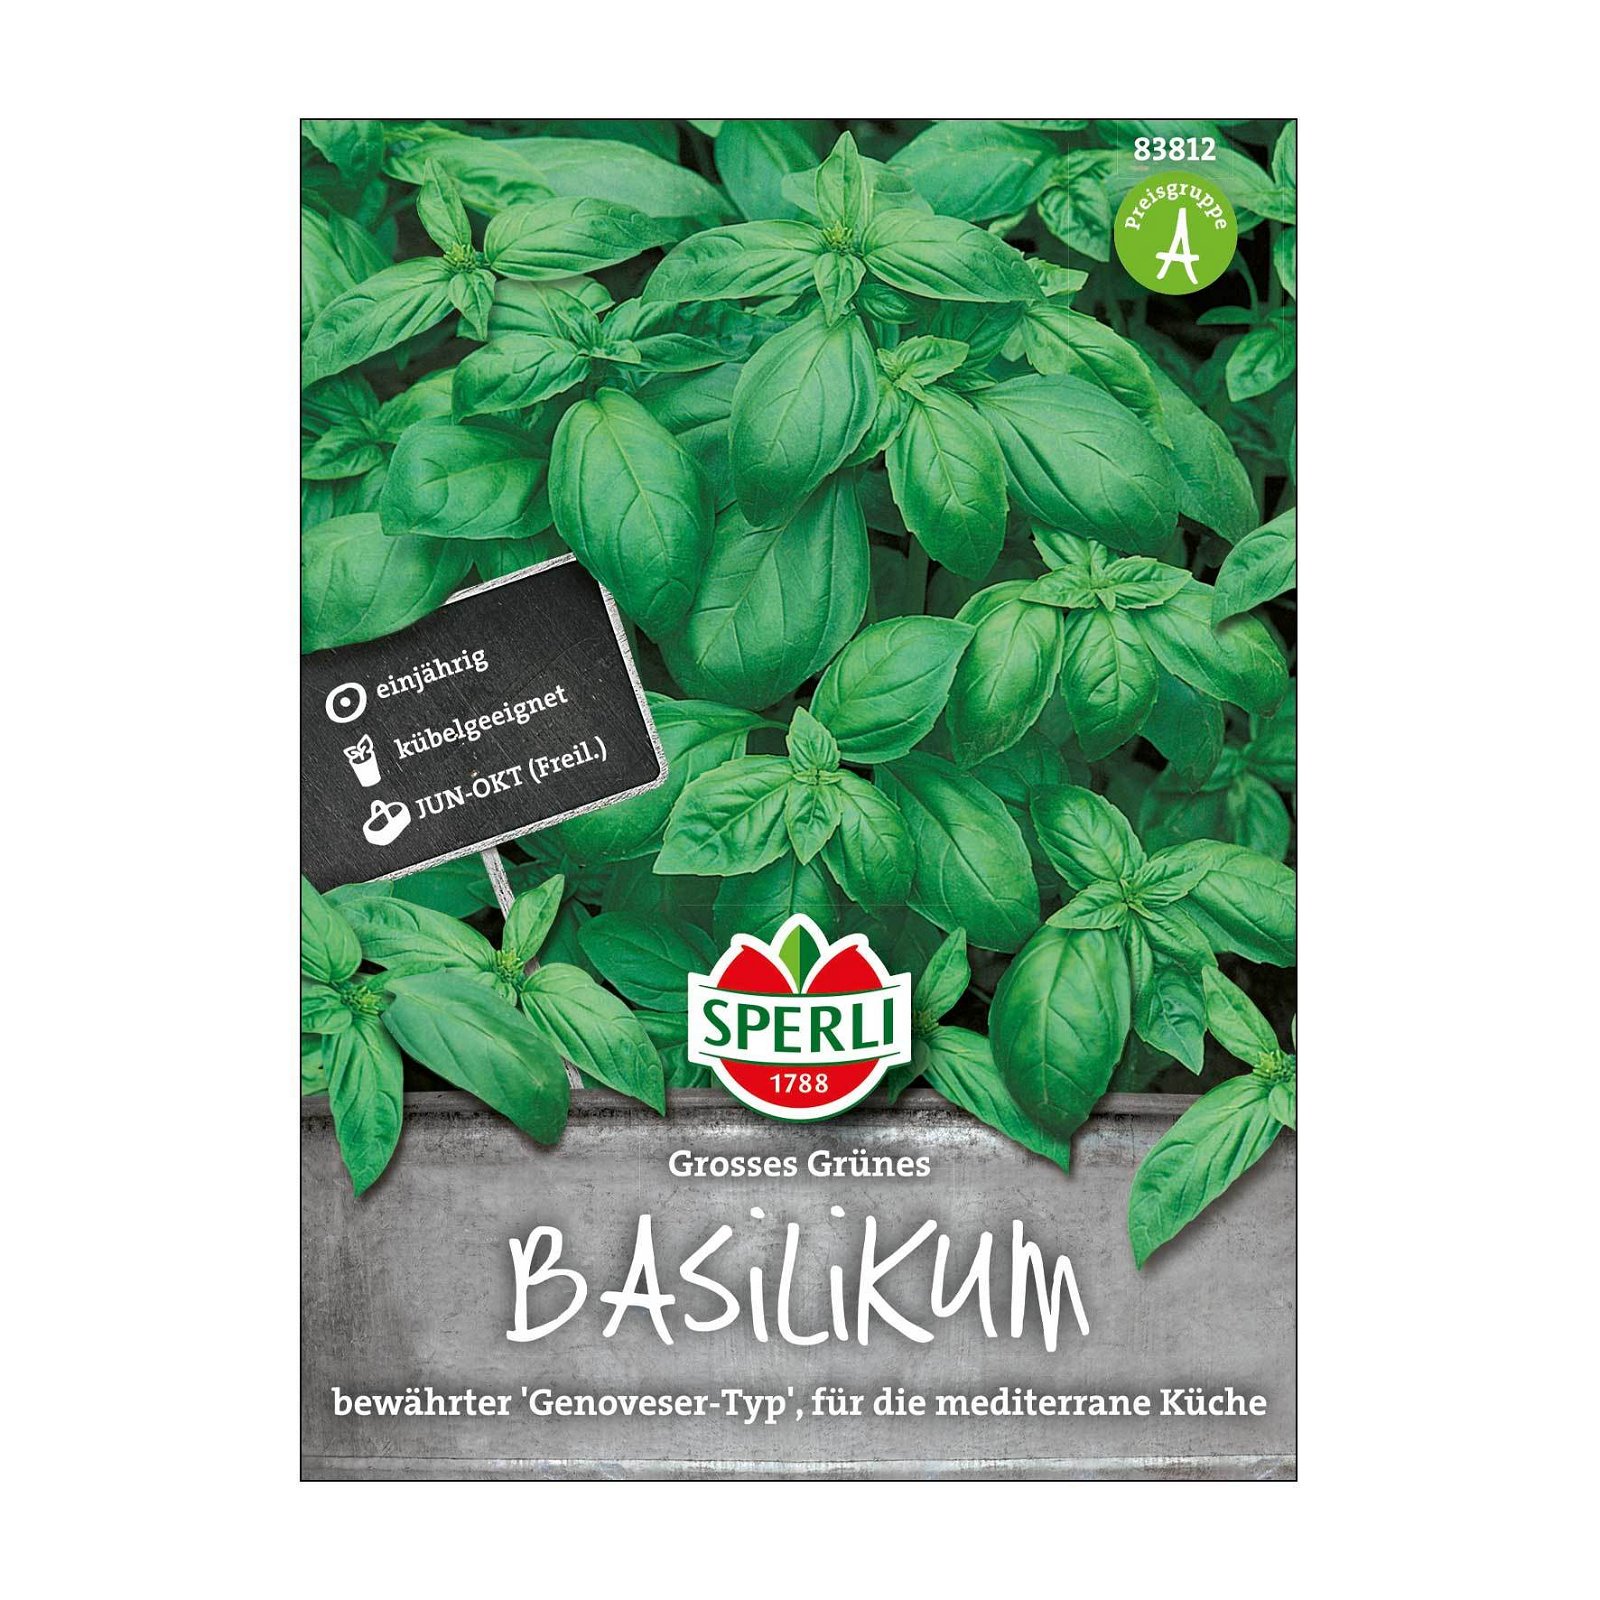 Sperli's Basilikum Genoveser, Ocimum basilicum